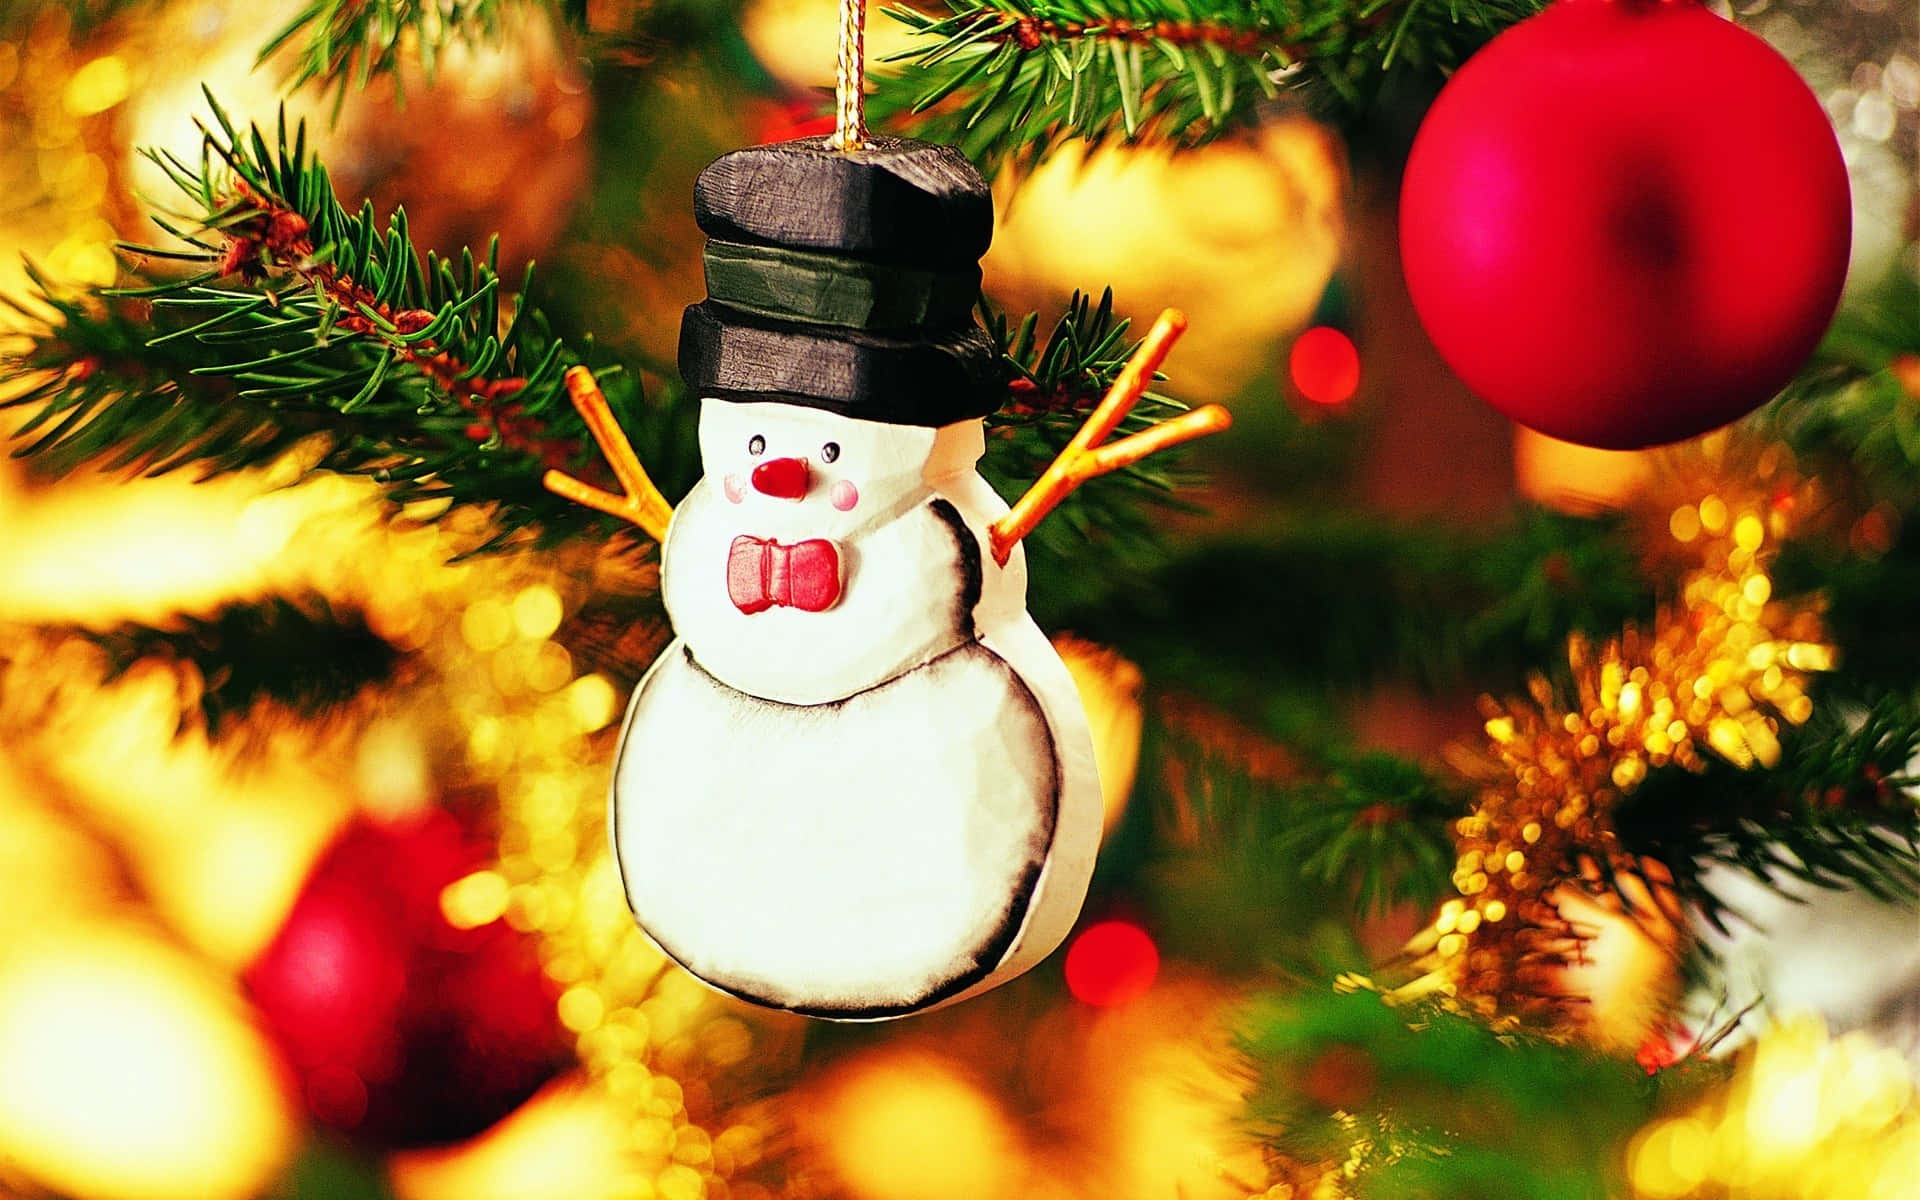 Festive Snowman Ornament Holiday Decor.jpg Wallpaper